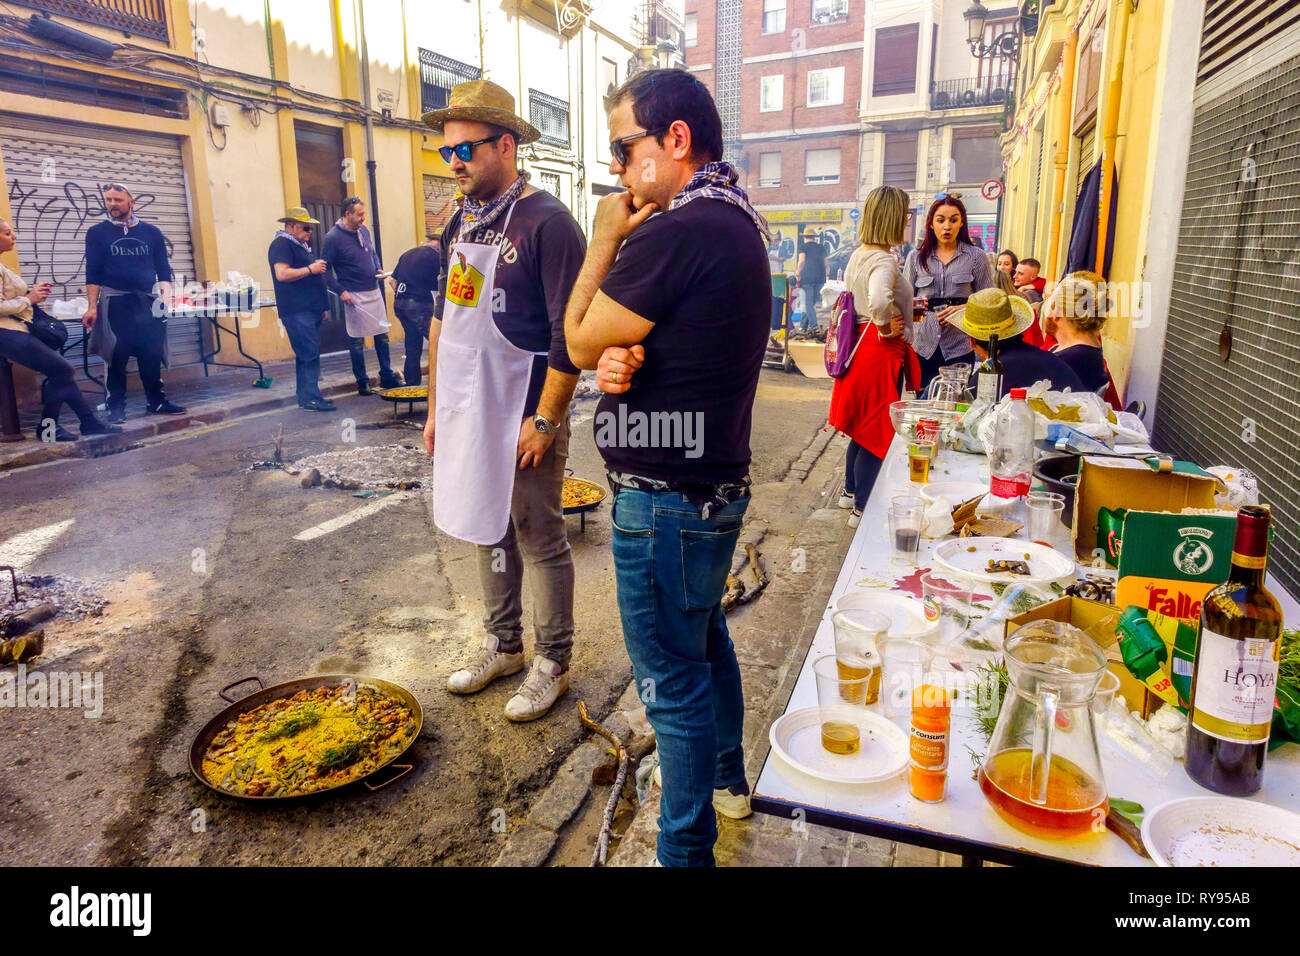 Street Fallas party Spain Valencia eating table in Barrio El Botanico Stock Photo